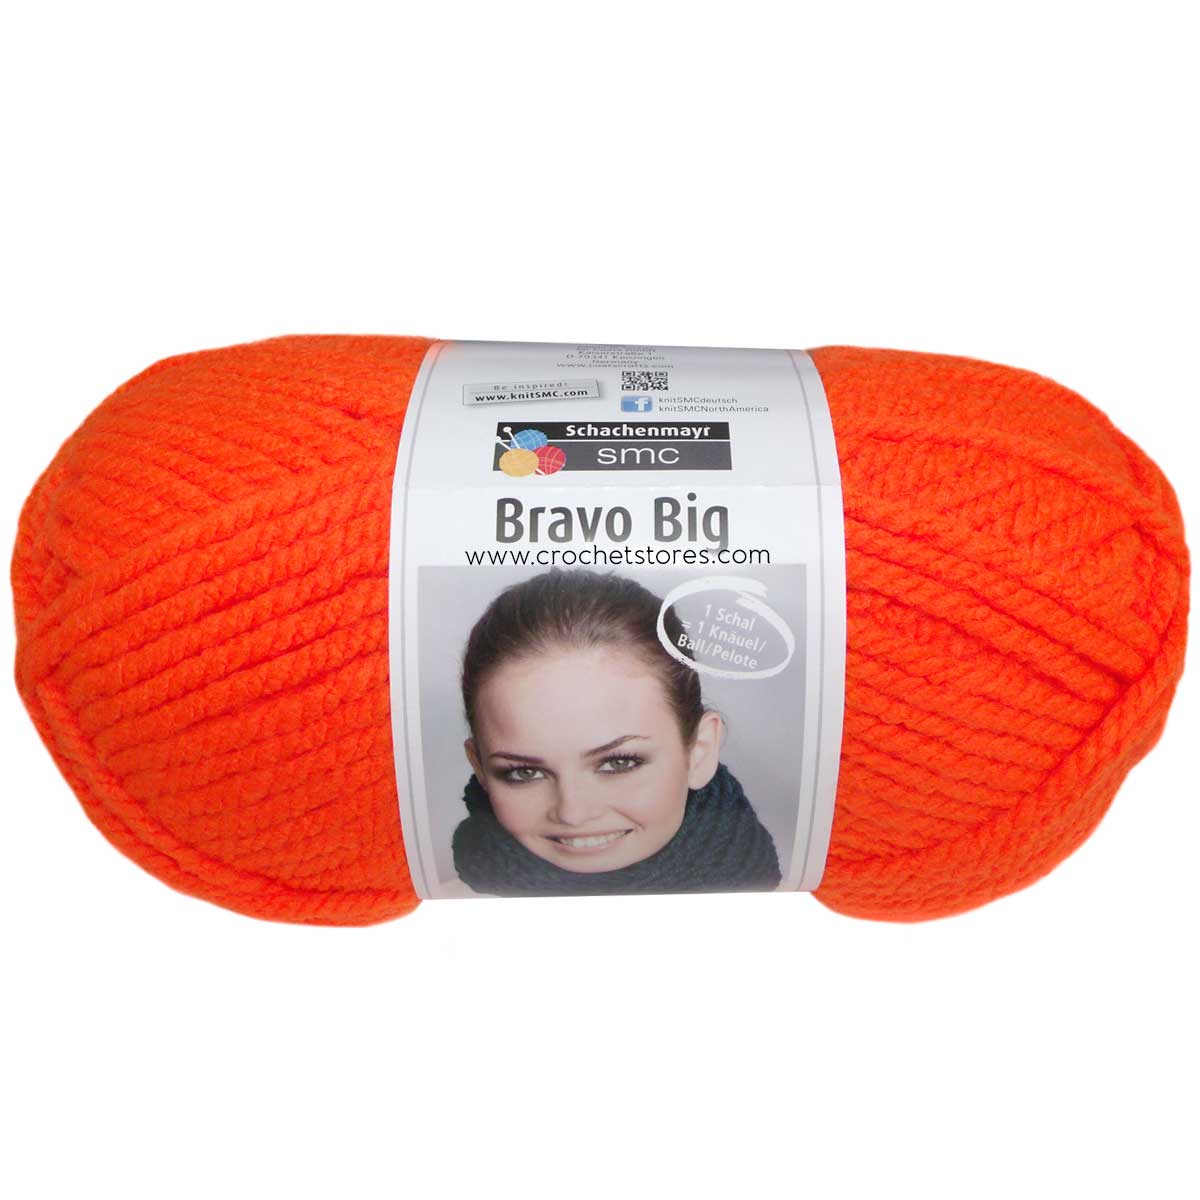 BRAVO BIG - Crochetstores9807705-82794082700912148